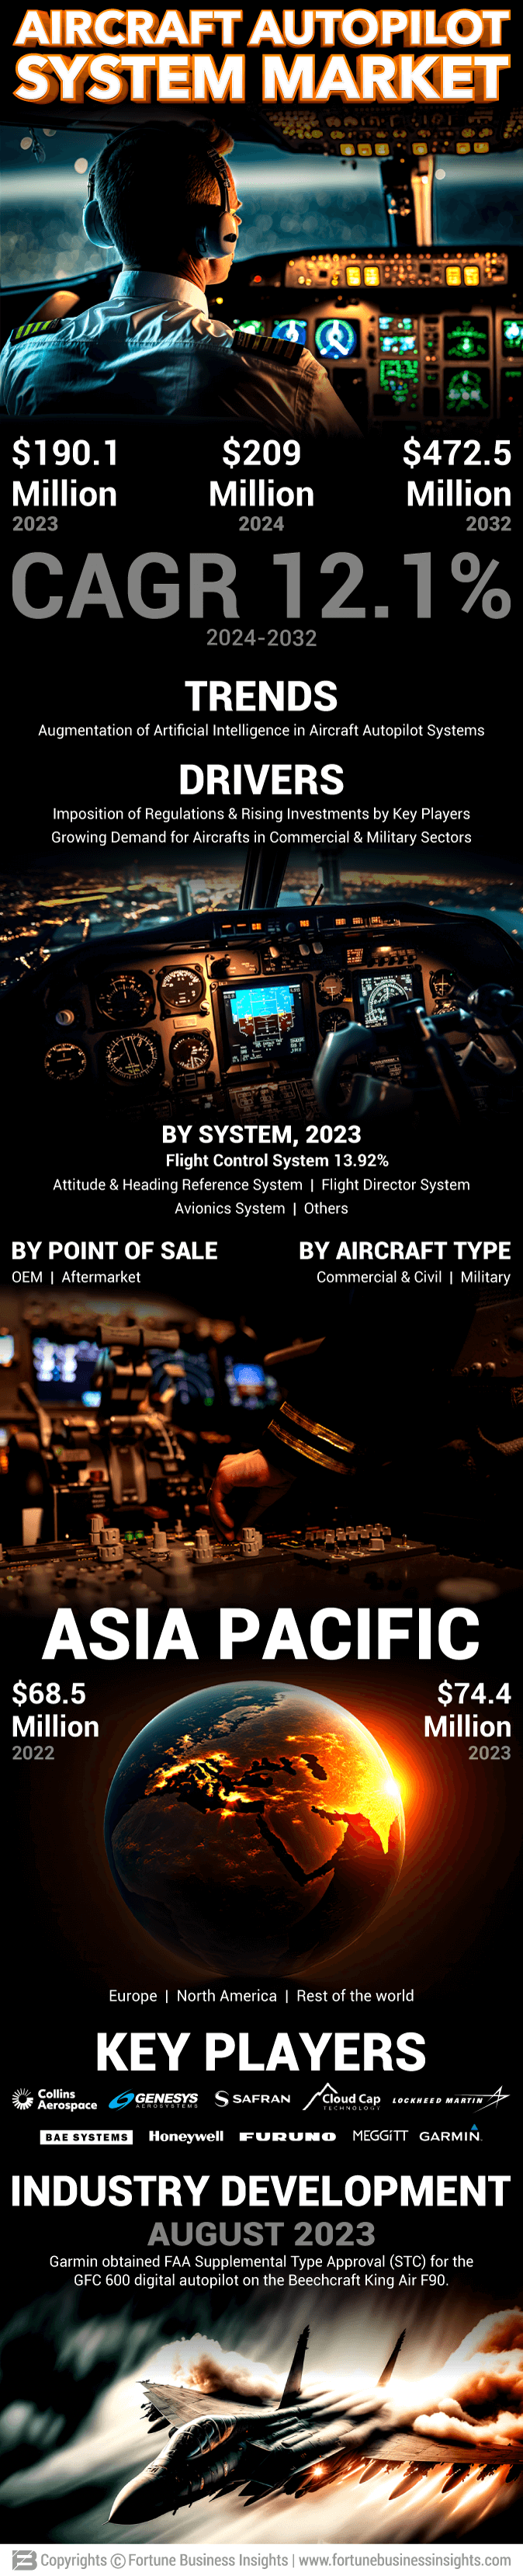 Aircraft Autopilot System Market